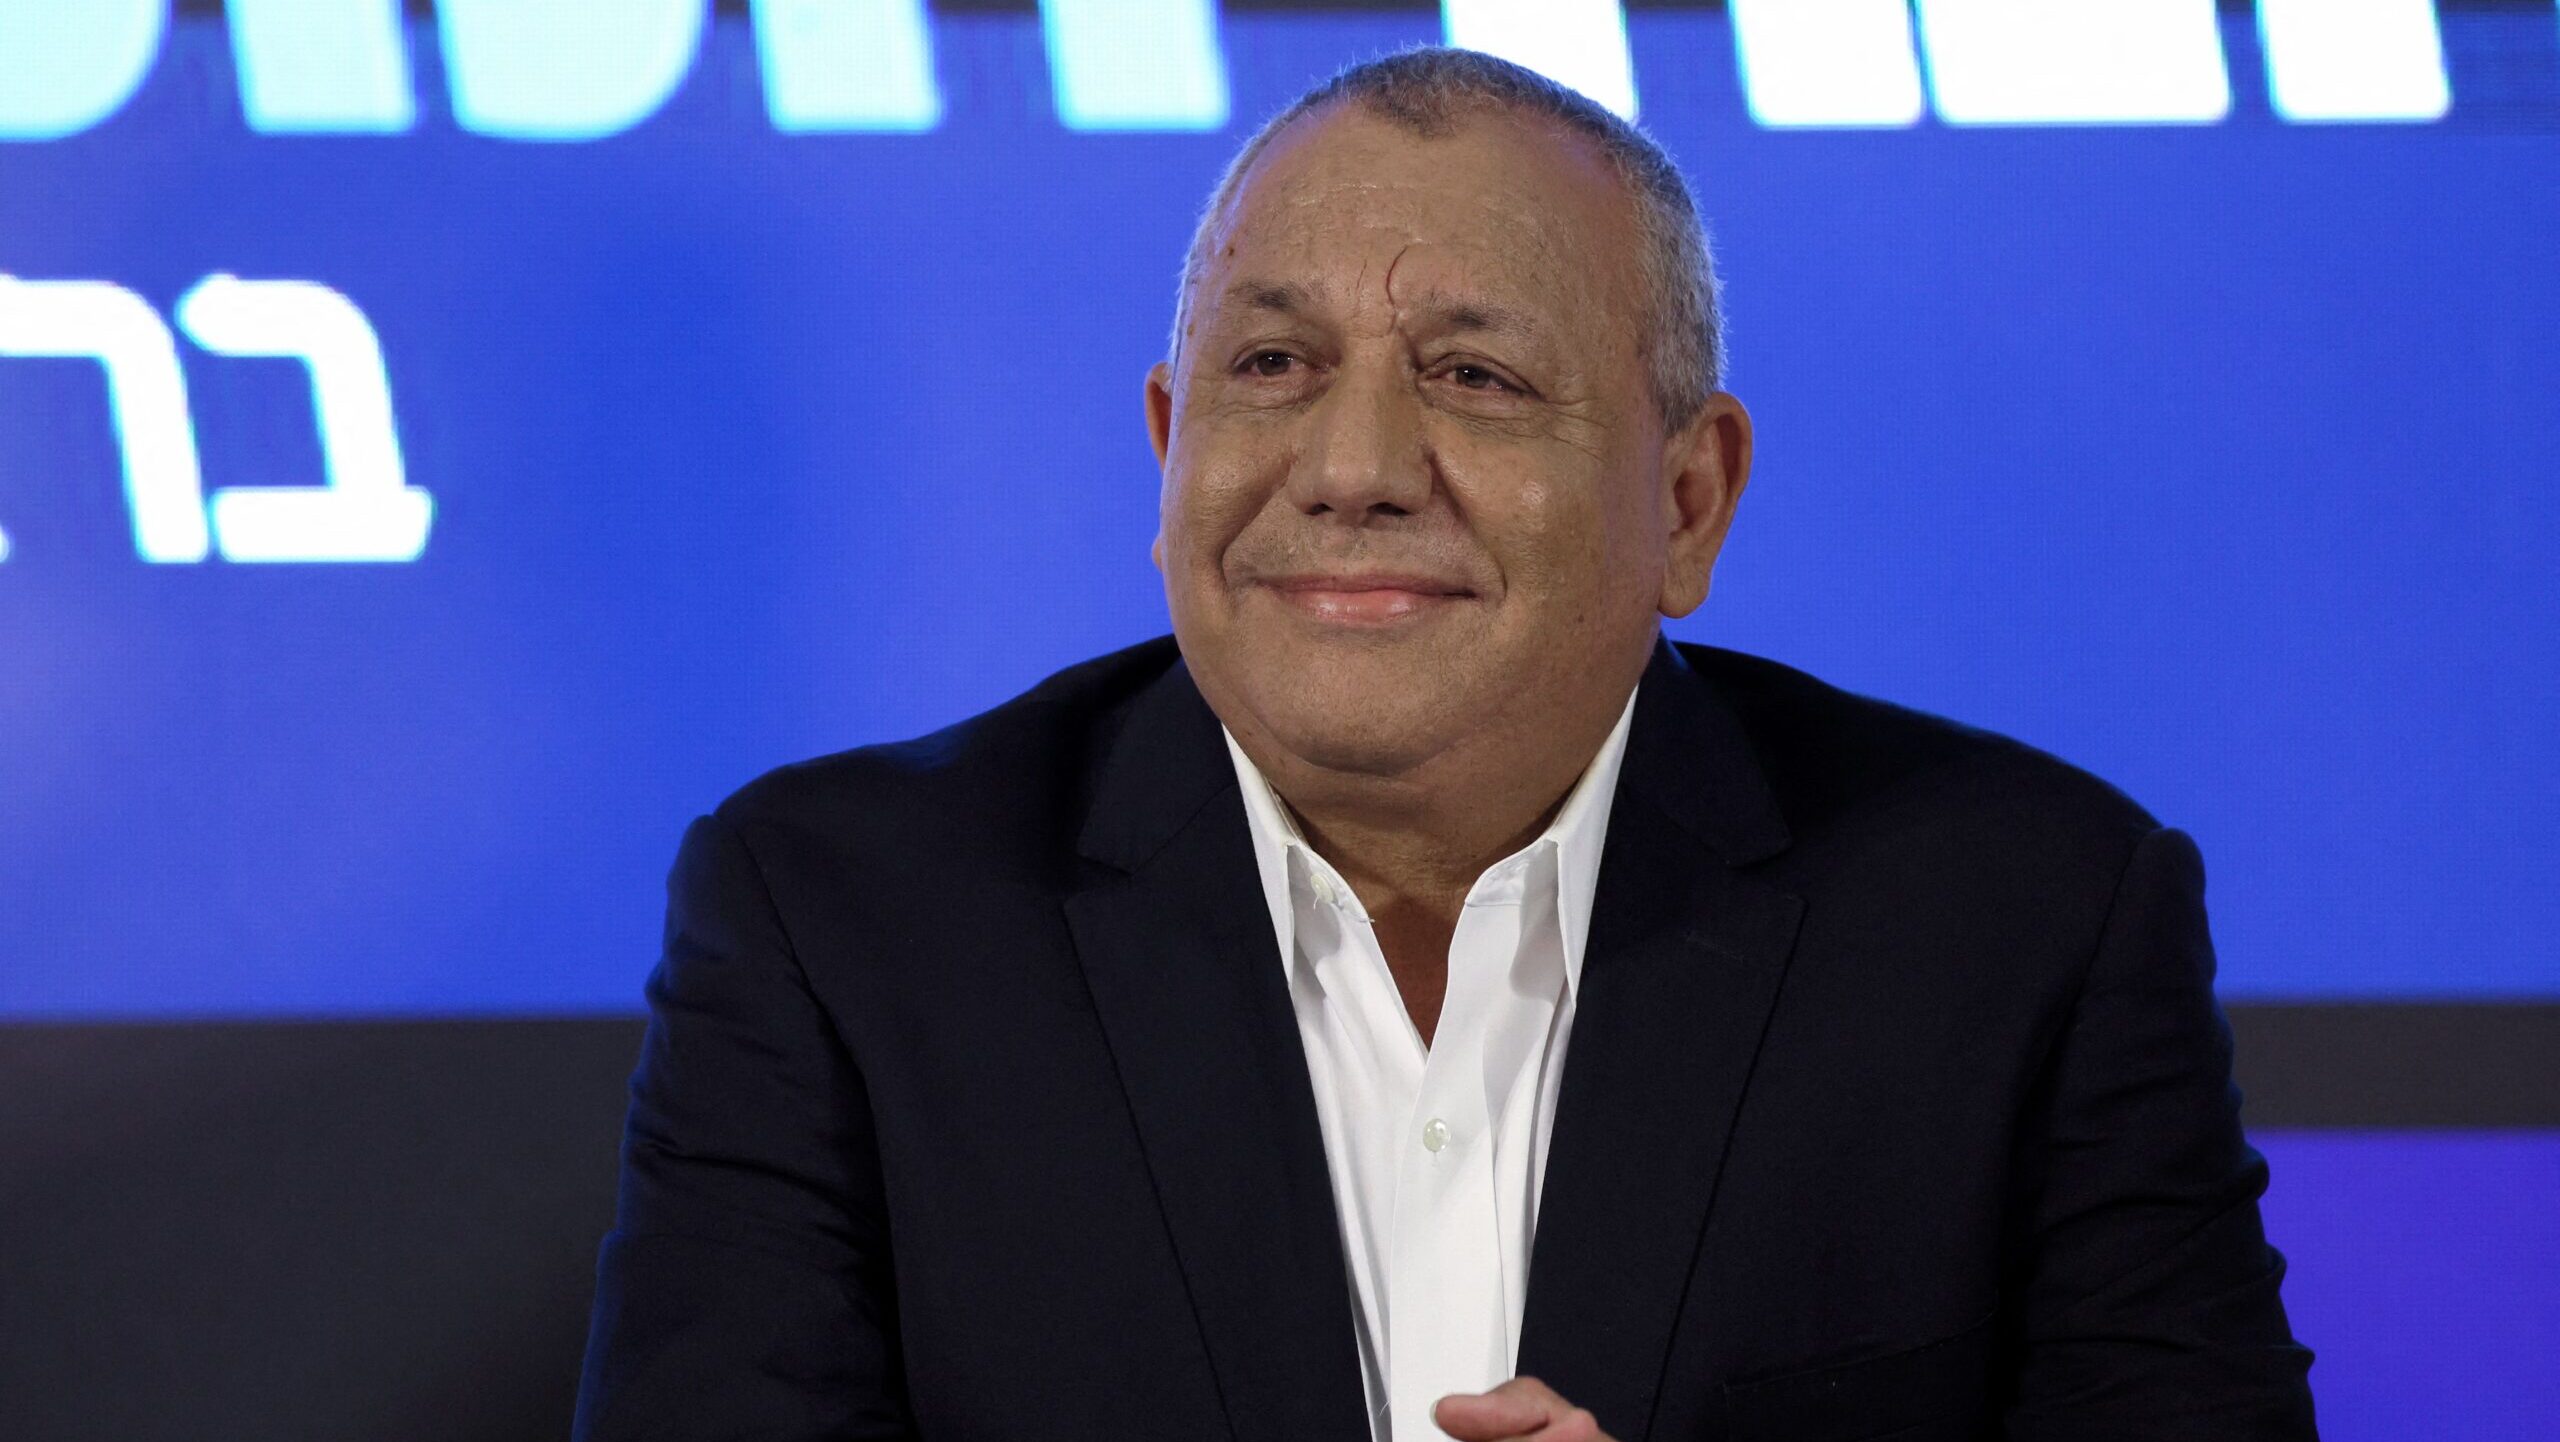 Gadi Eisenkot Criticizes Netanyahu’s Handling of Gaza Conflict, Calls for Elections